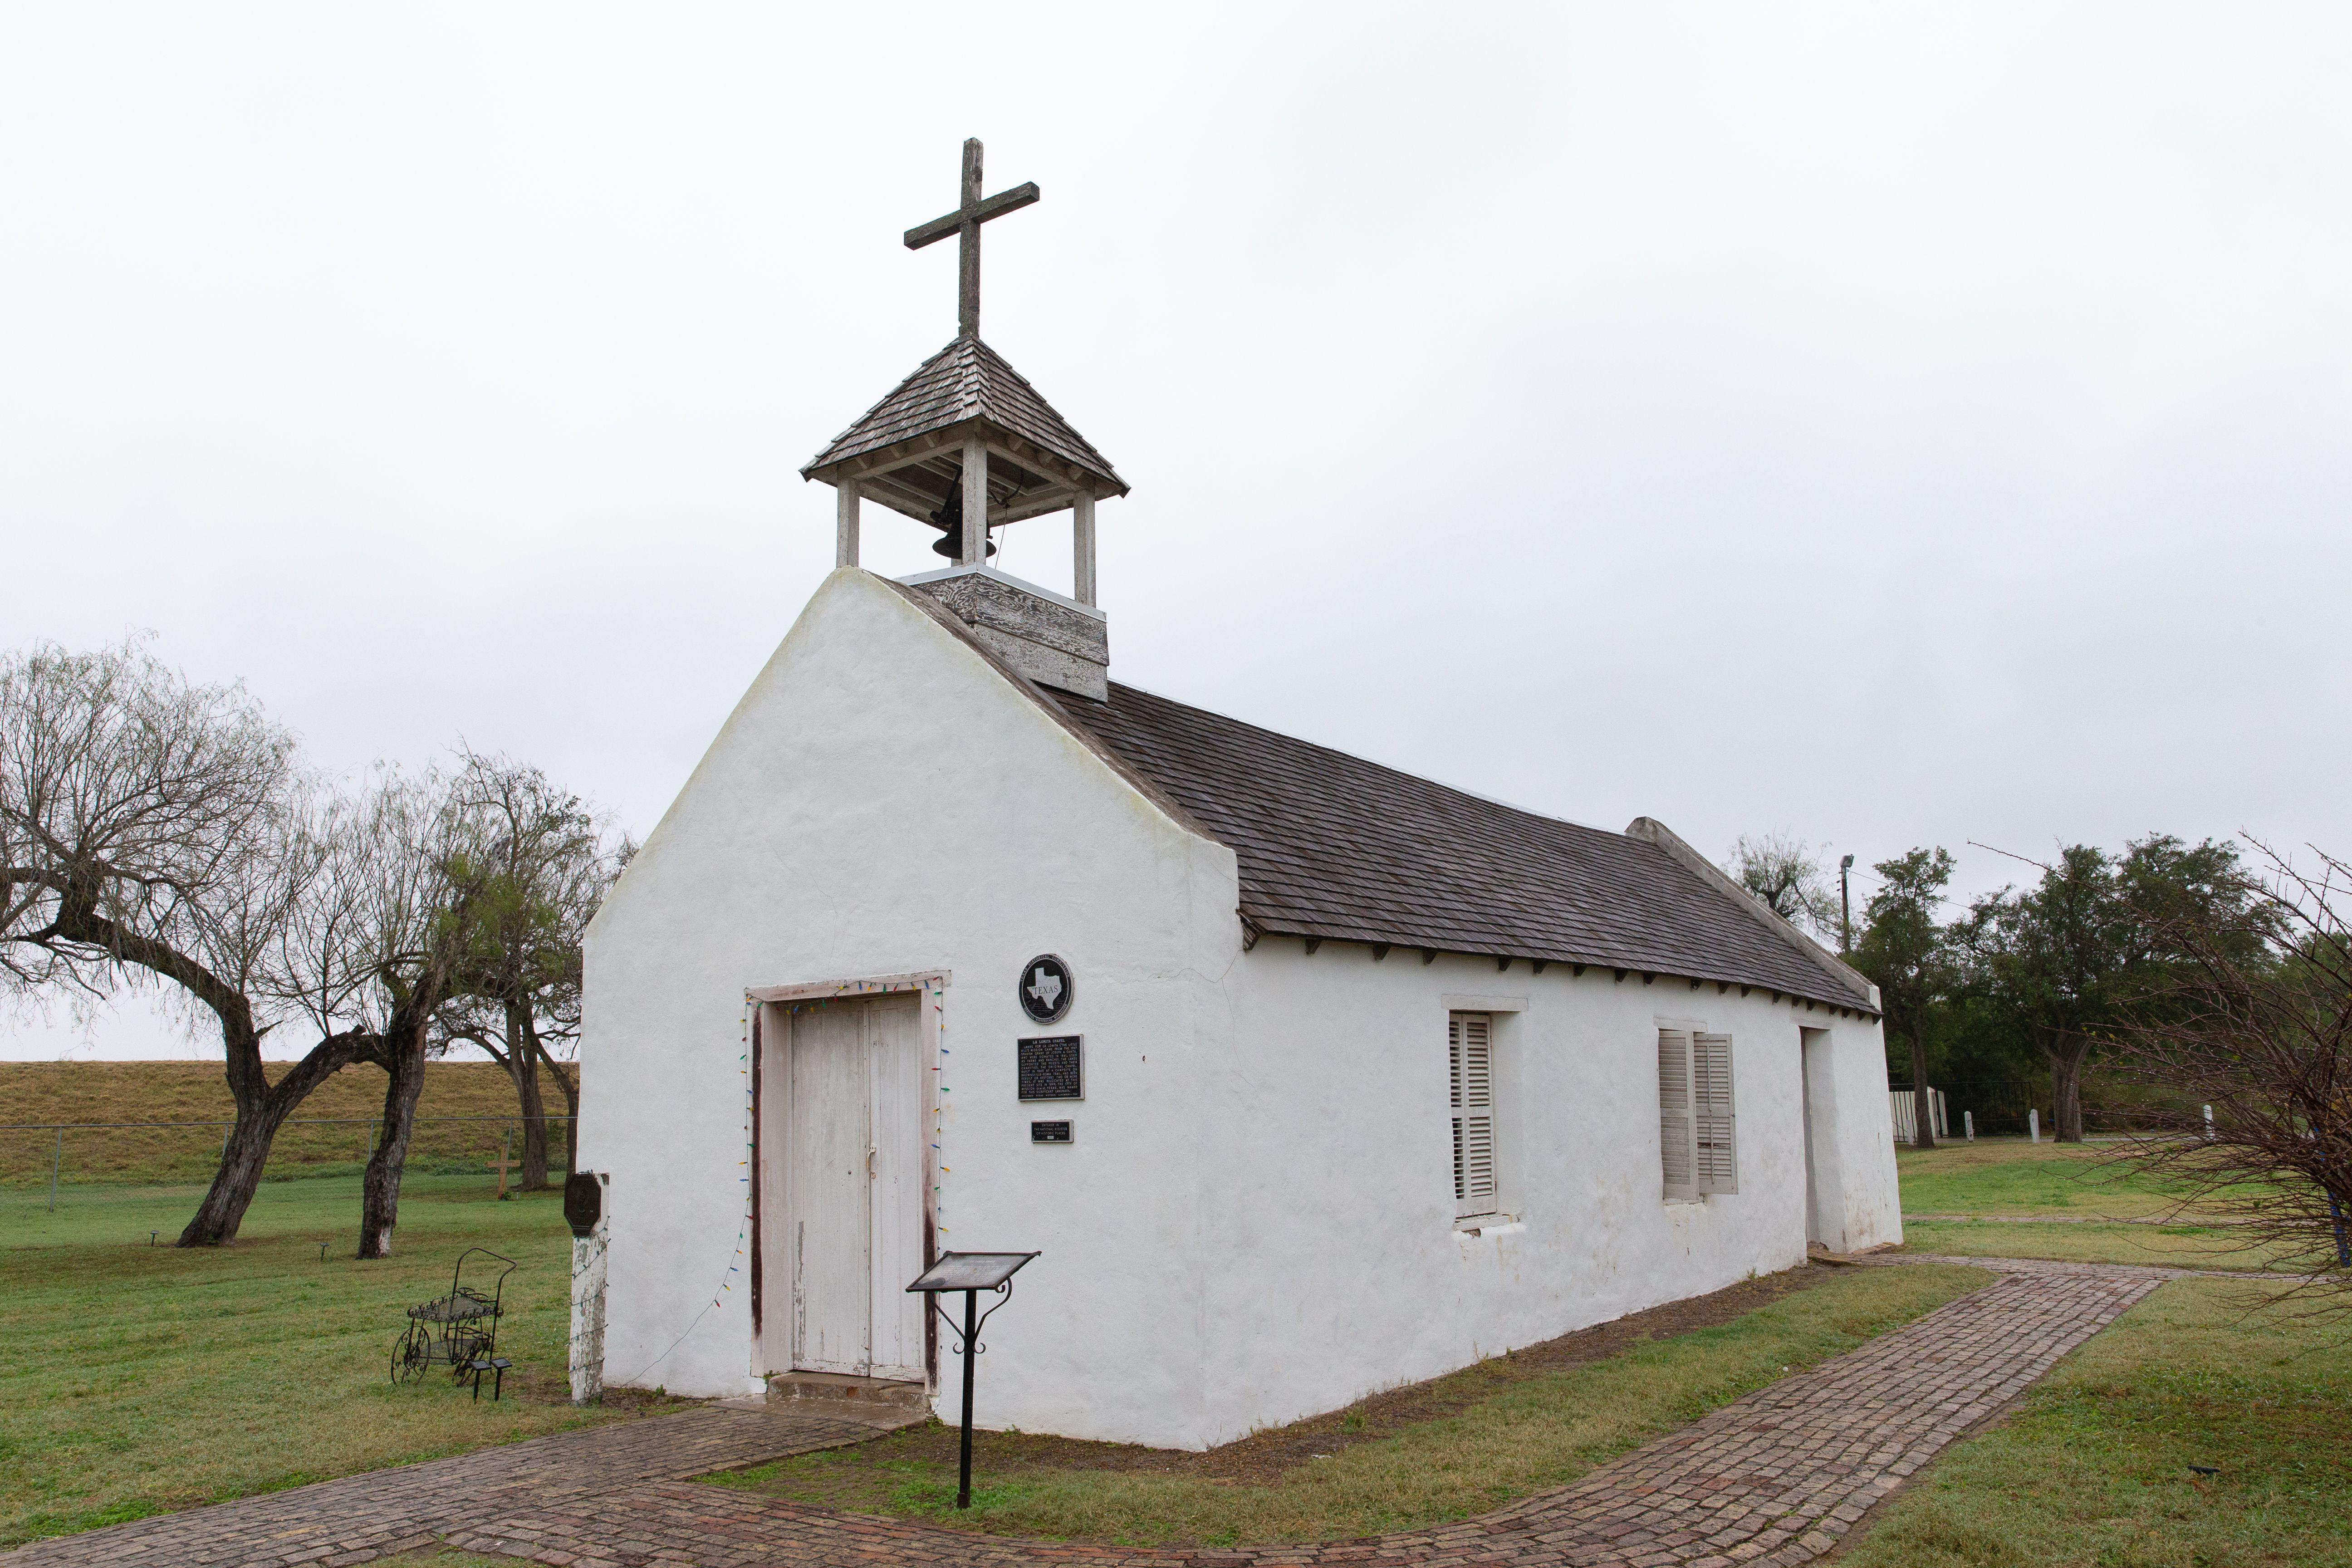 A small church in a rural area